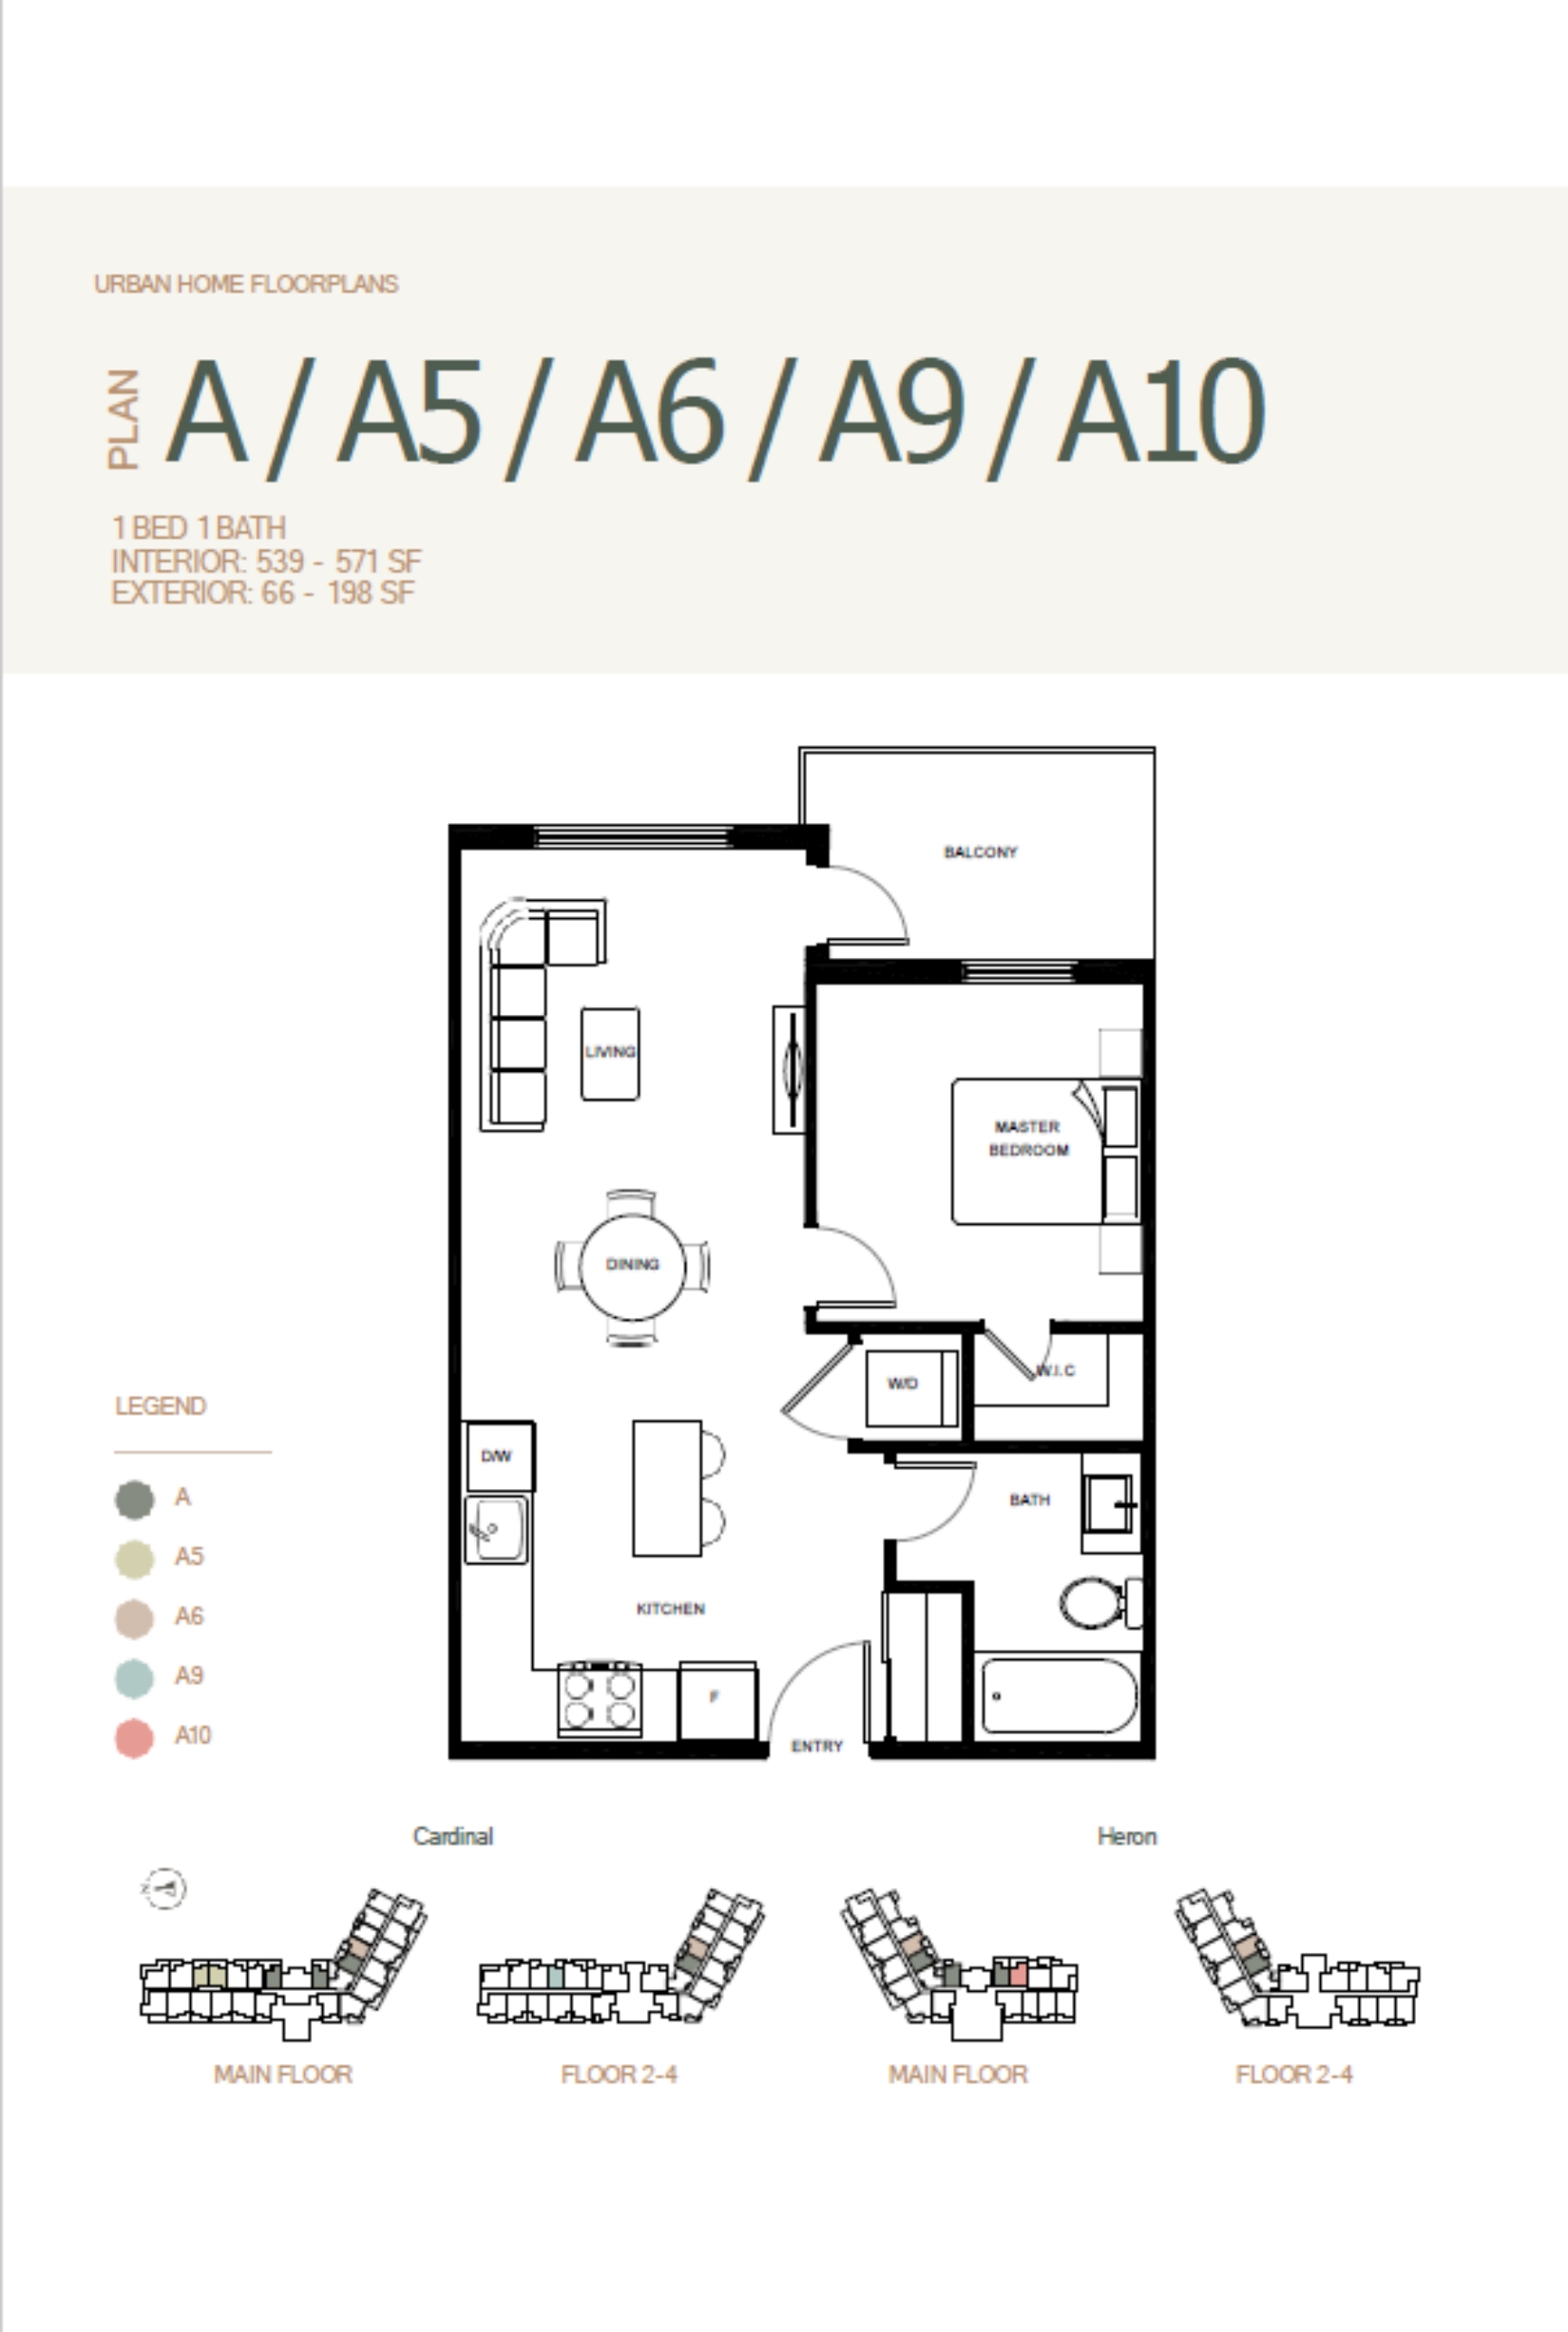  A/A5/A6/A9/A10  Floor Plan of Park & Maven (Condos - Cardinal & Heron) with undefined beds